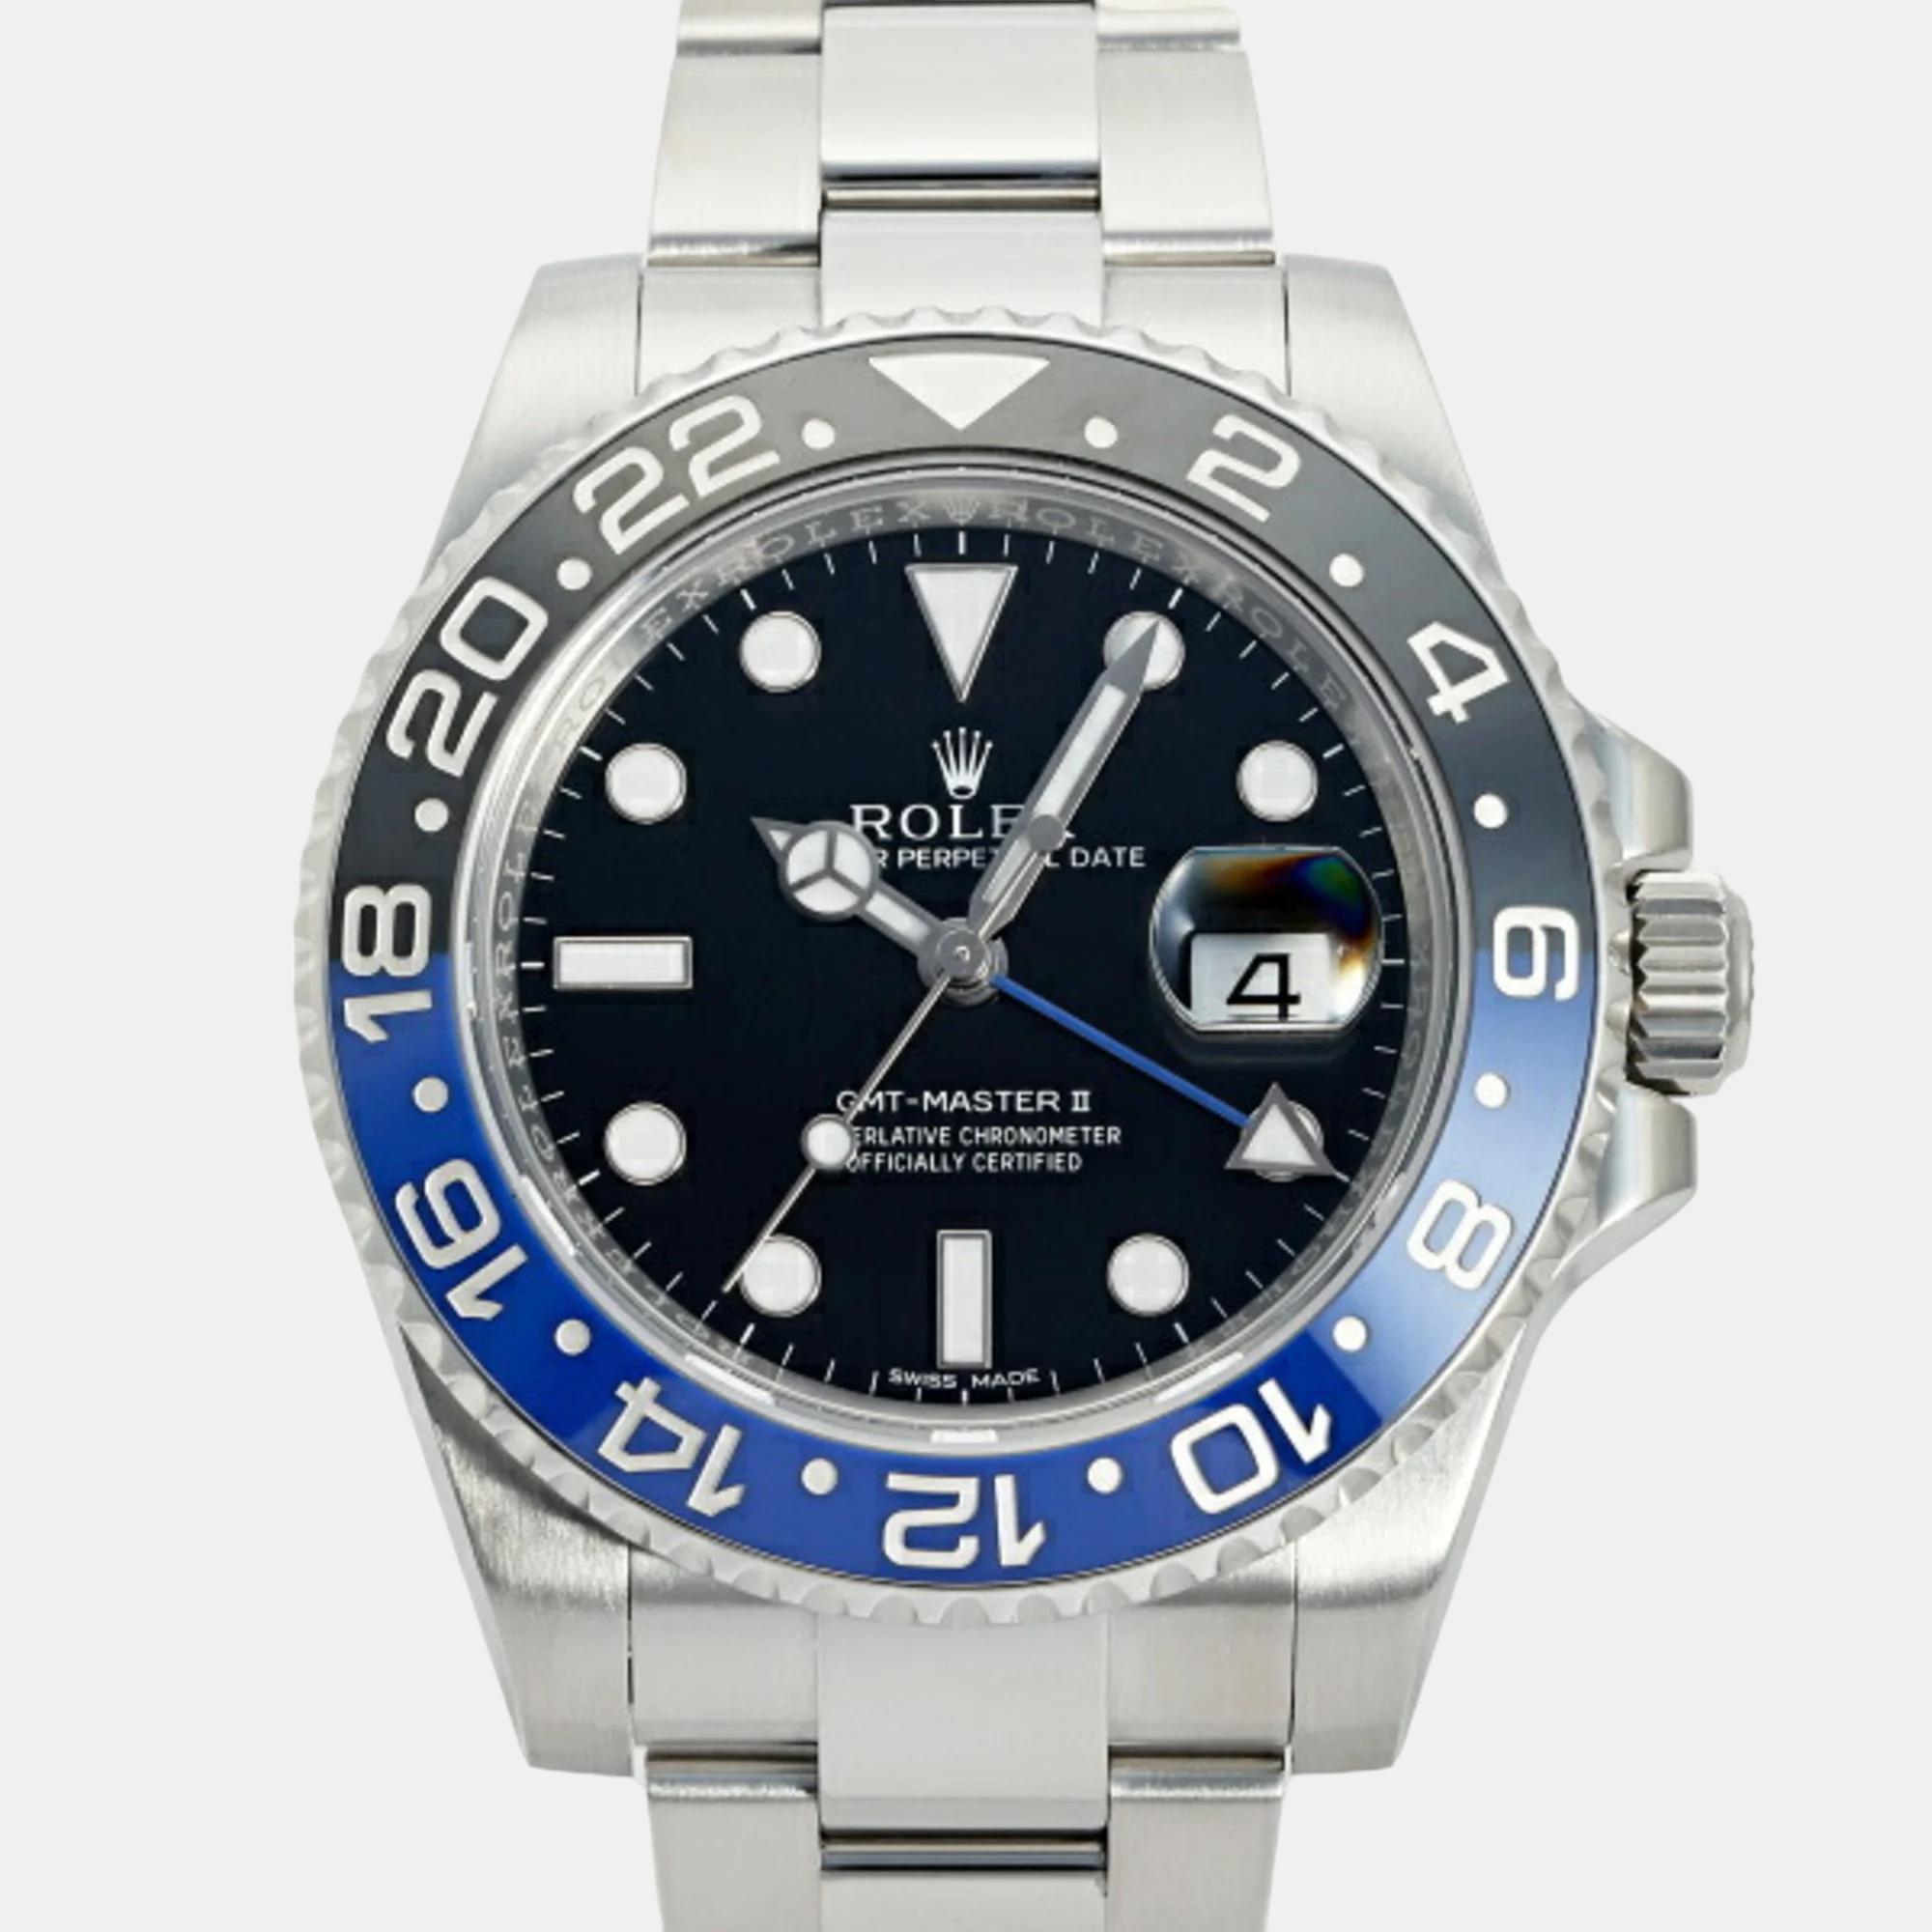 Rolex black stainless steel gmt master ii 116710blnr men's watch 40 mm